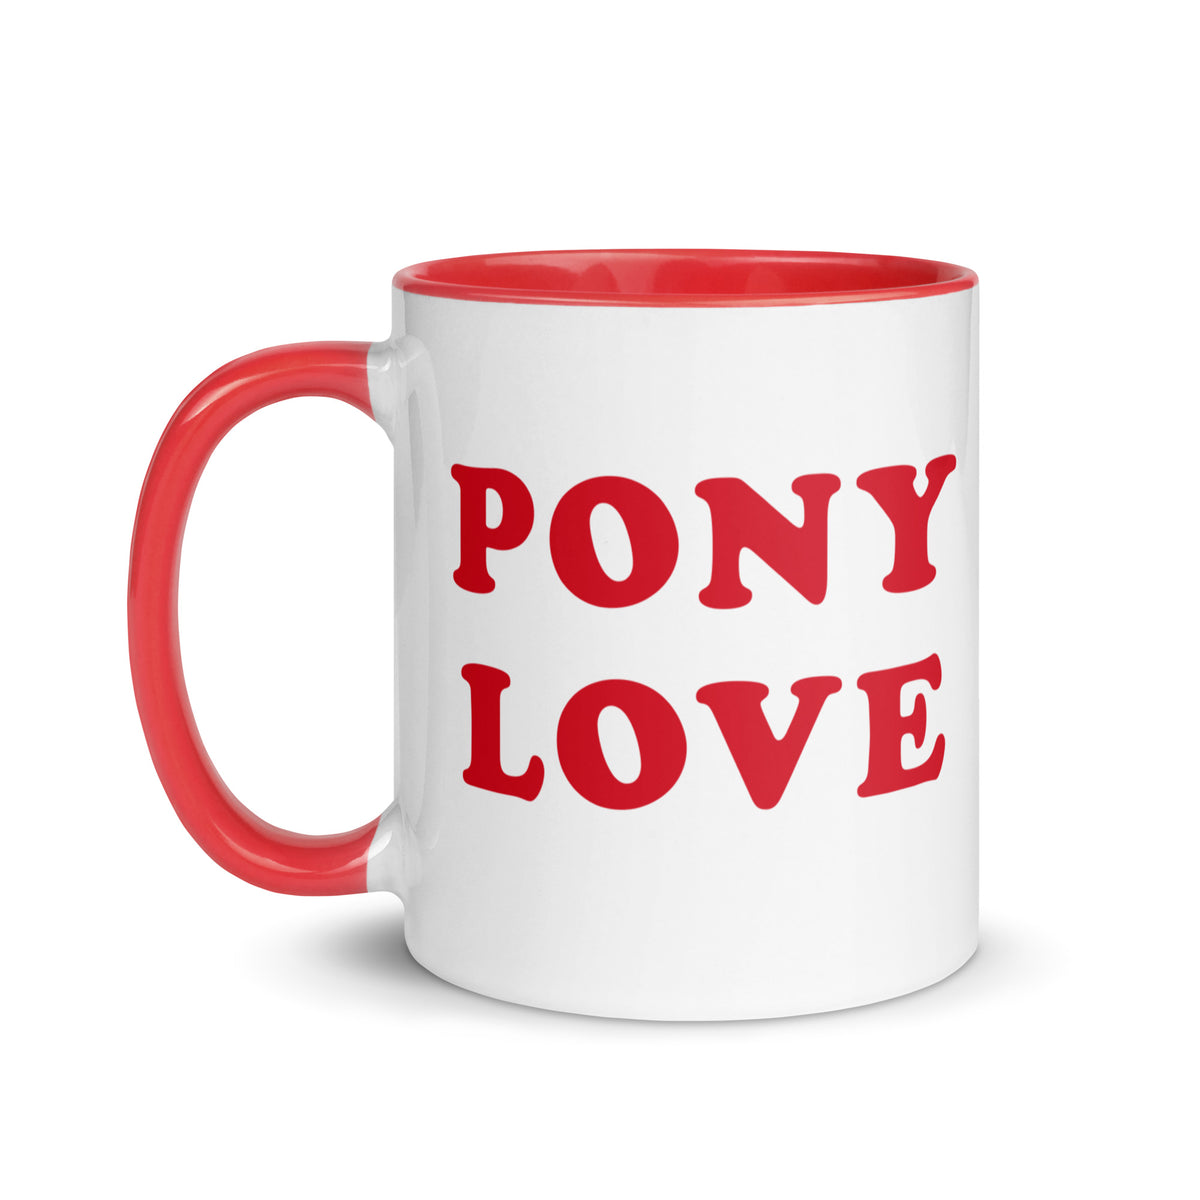 Pony Love Mug